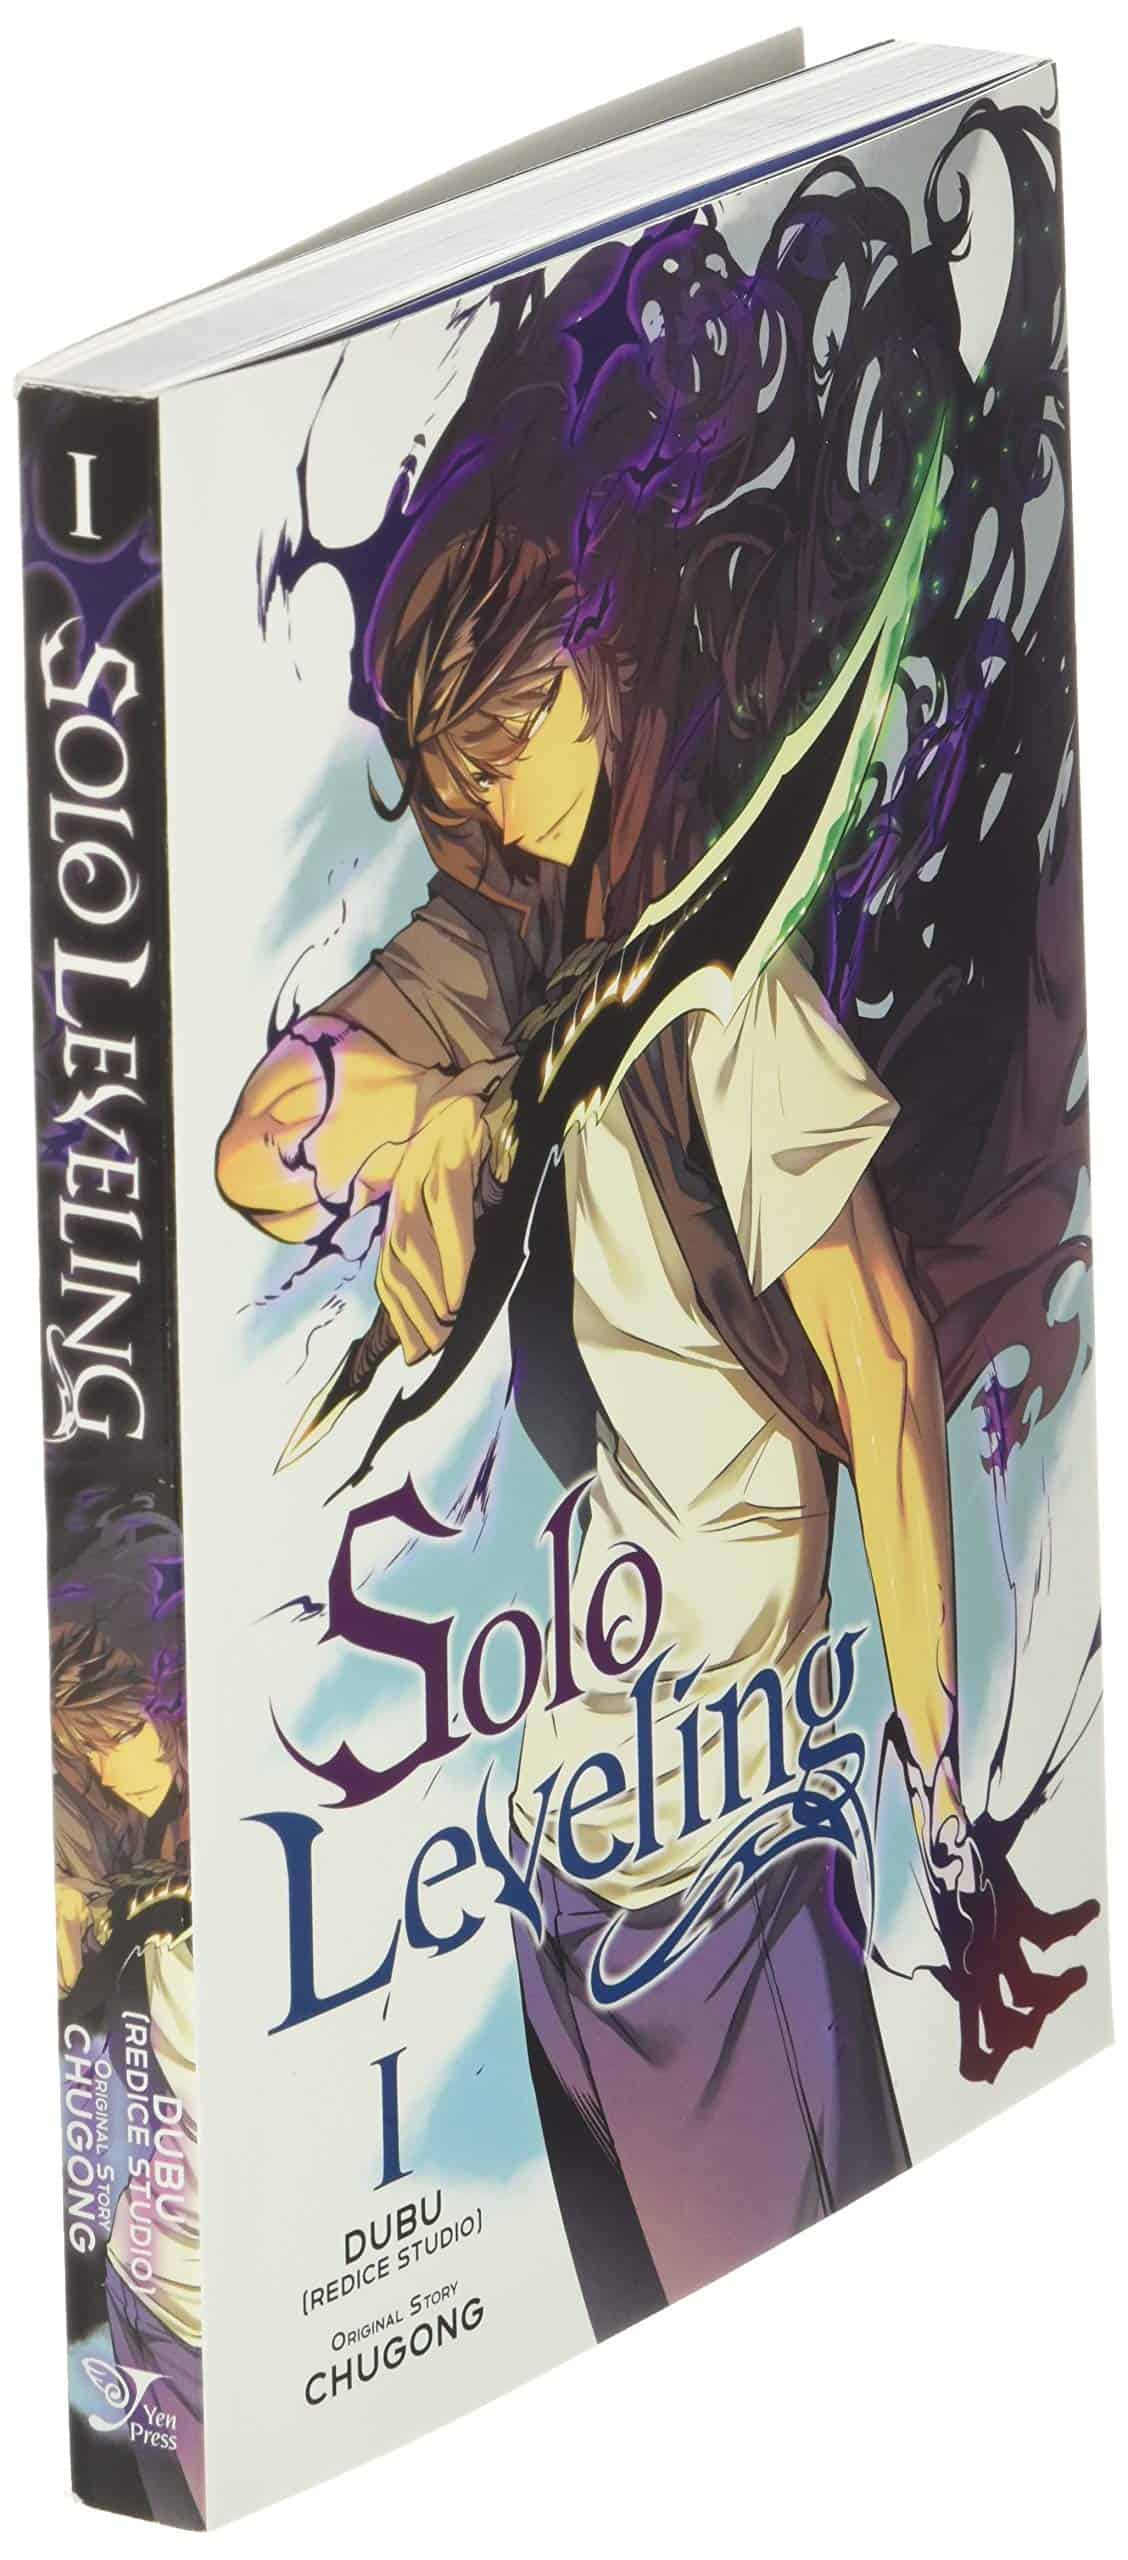 Solo Leveling Japanese Light Novel Adaptation Cover Released